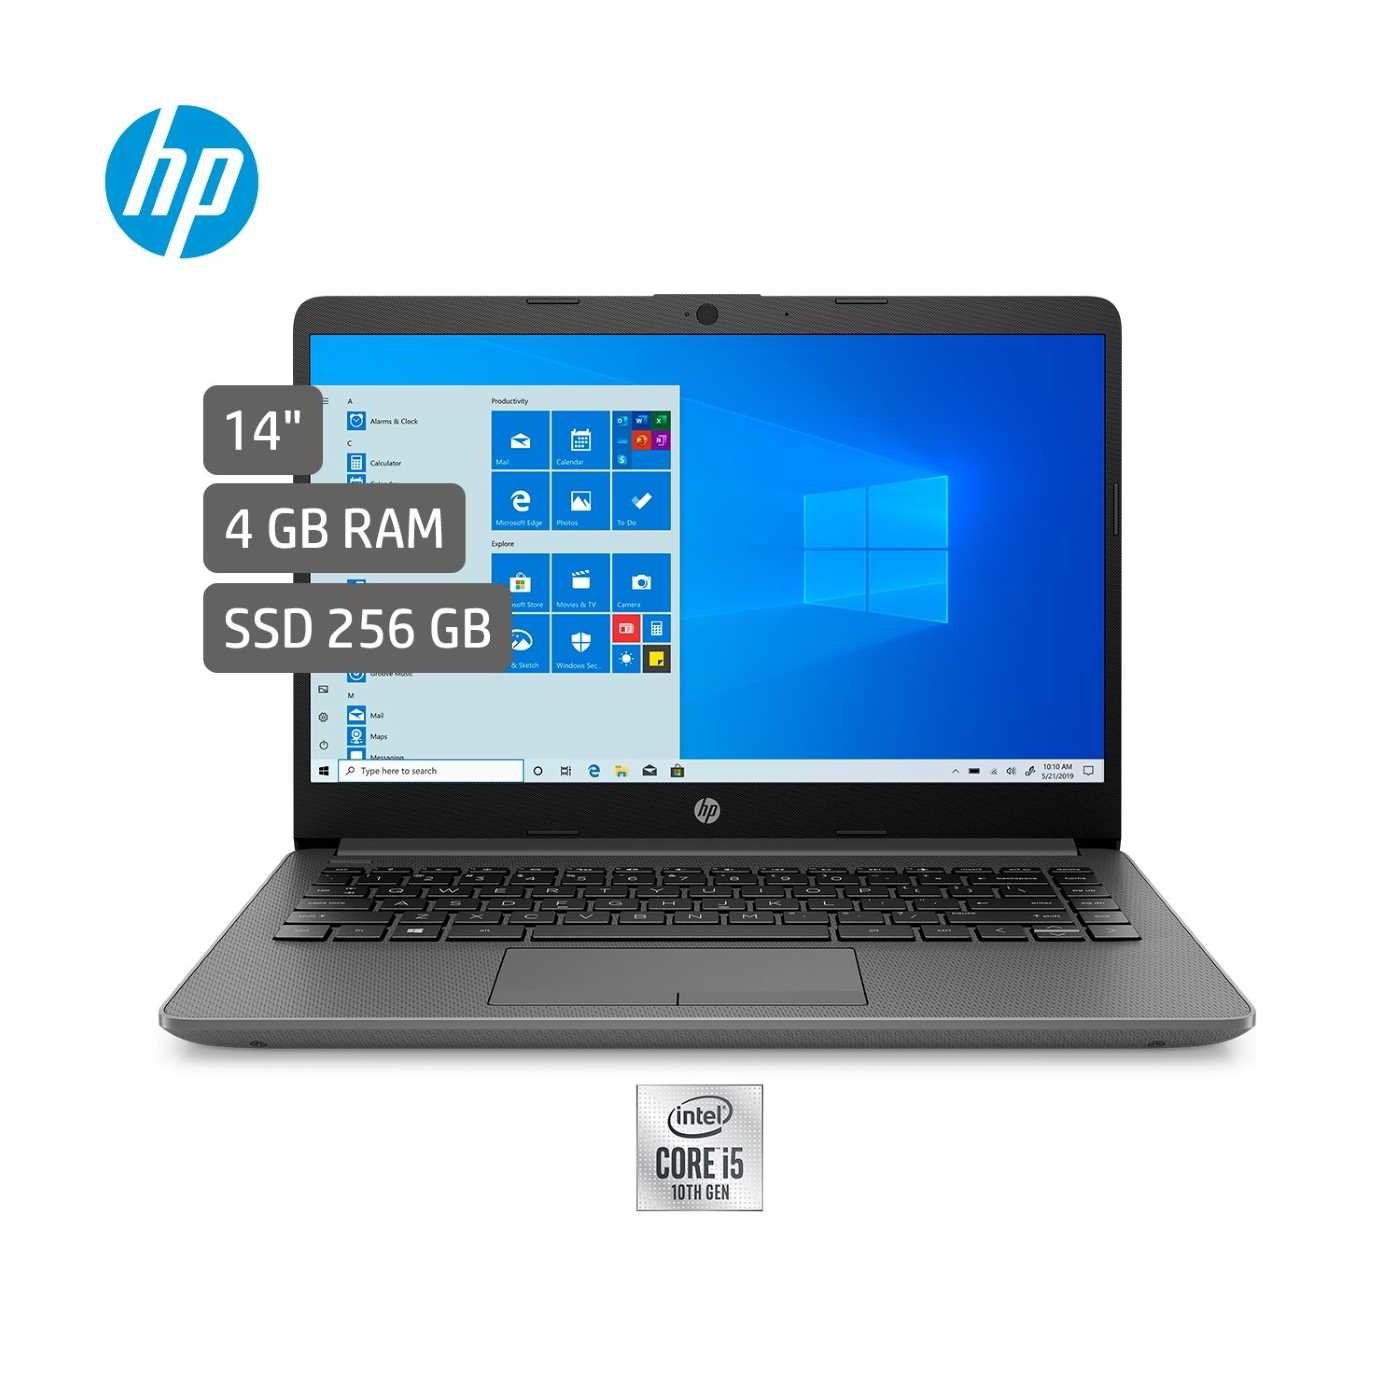 Computador Portátil HP 14" Pulgadas cf2075la - Intel Core i5 - RAM 4GB - Disco SSD 256 GB - Gris